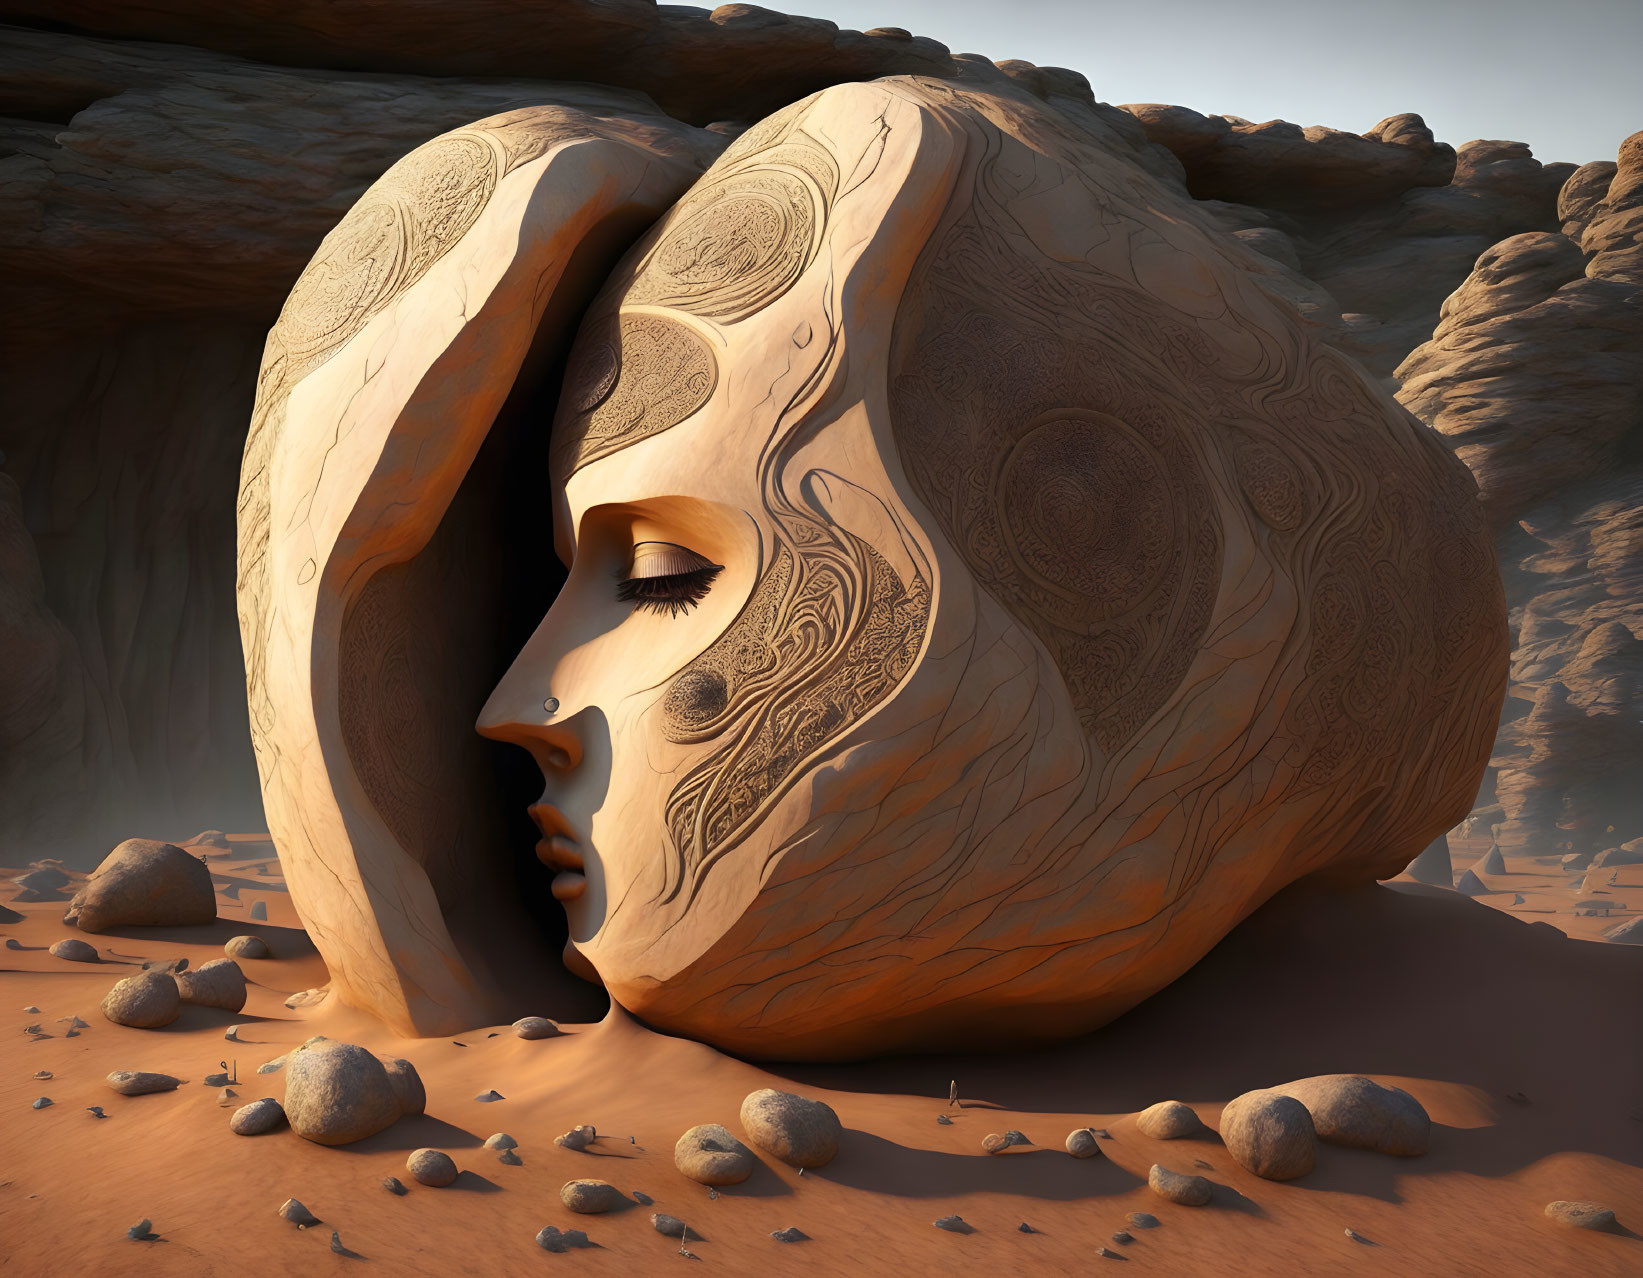 Surreal illustration: Giant wooden head in desert landscape